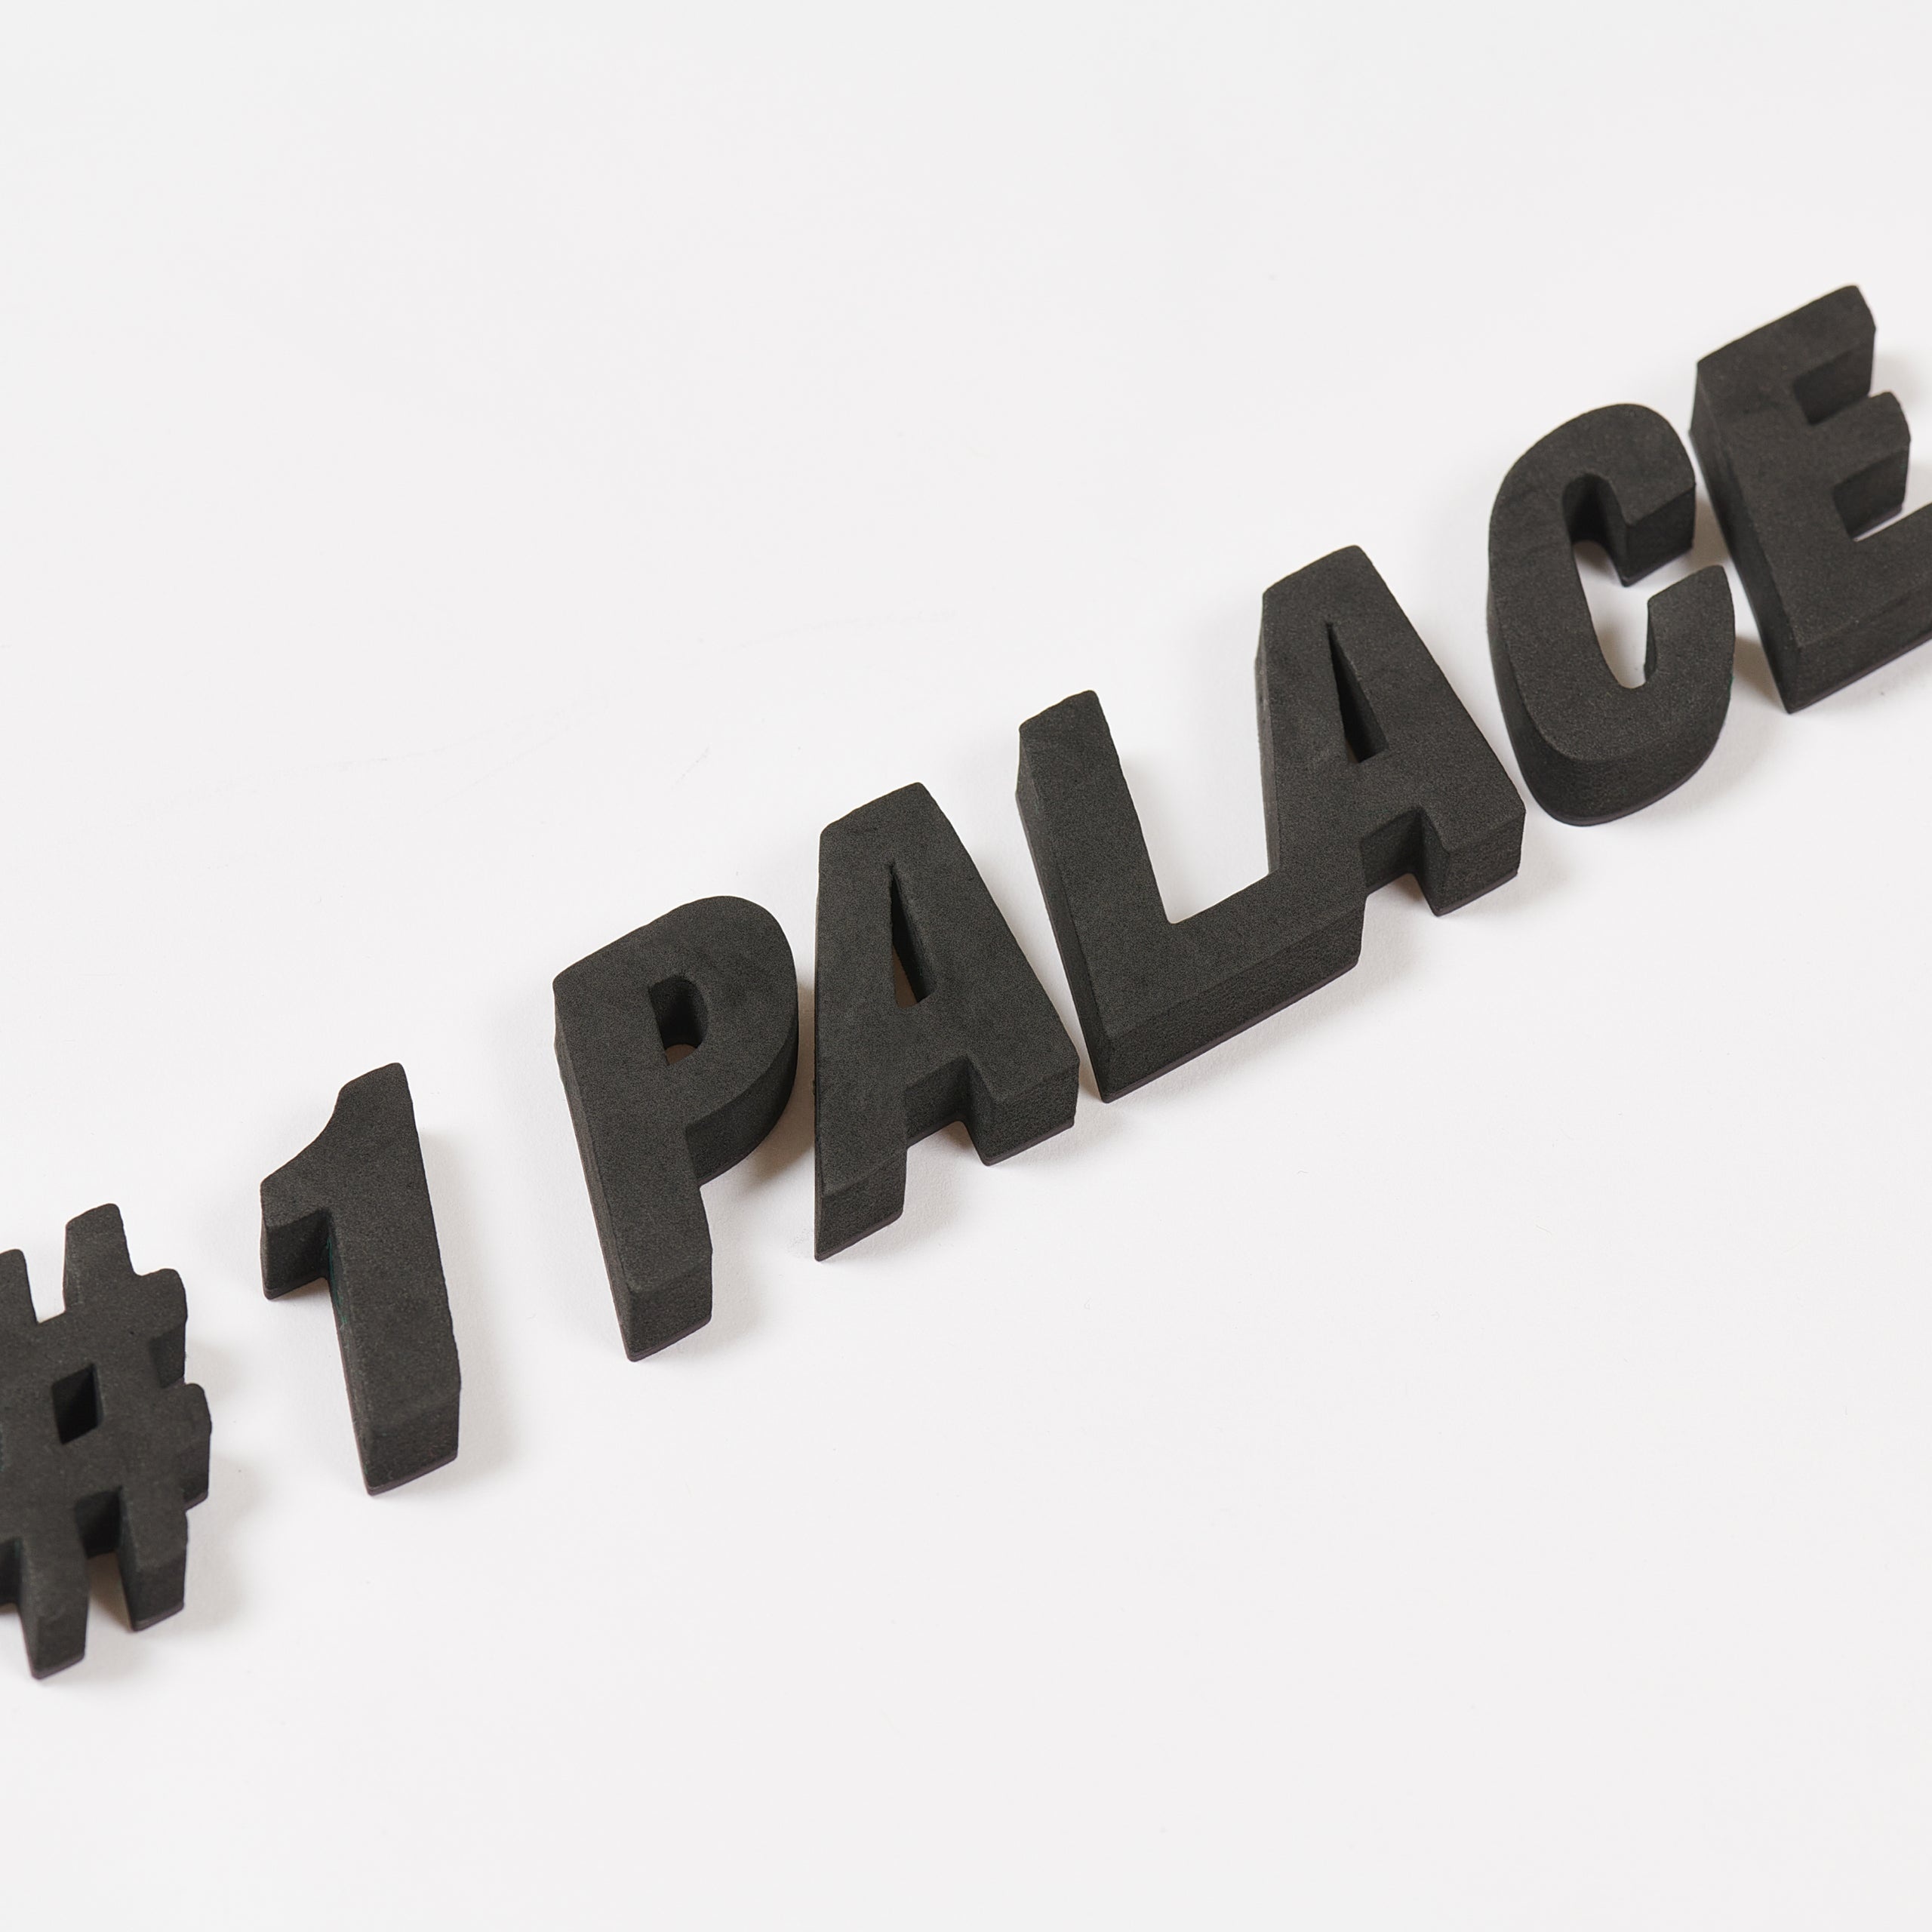 PALACE ALPHABET FRIDGE MAGNETS BLACK - 4